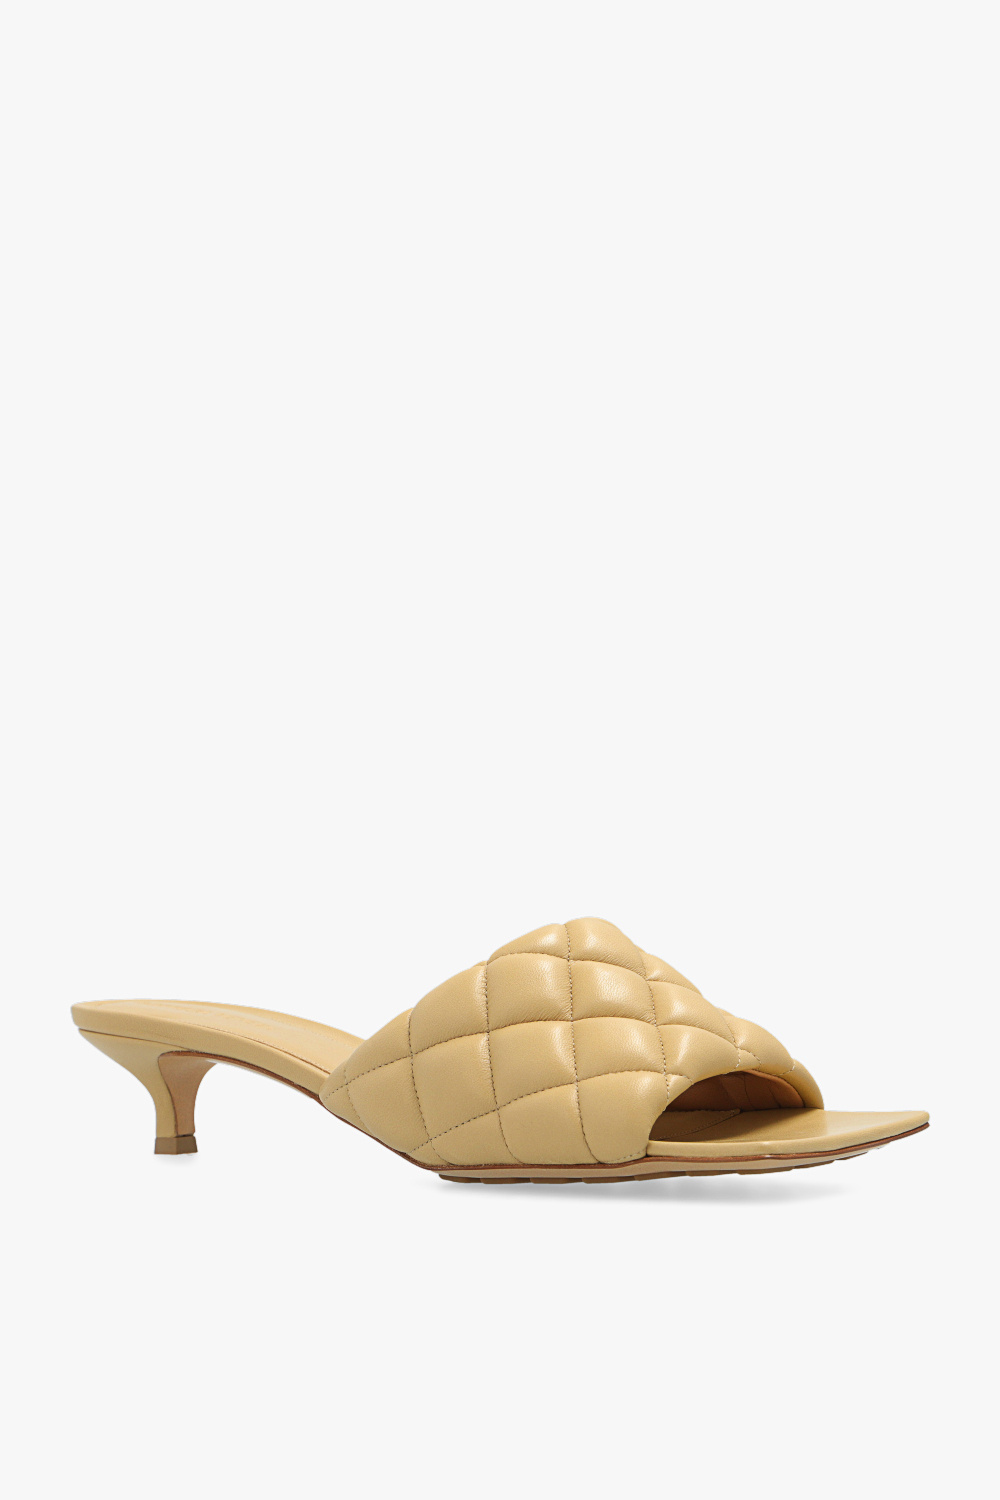 Bottega Veneta ’Padded’ heeled mules